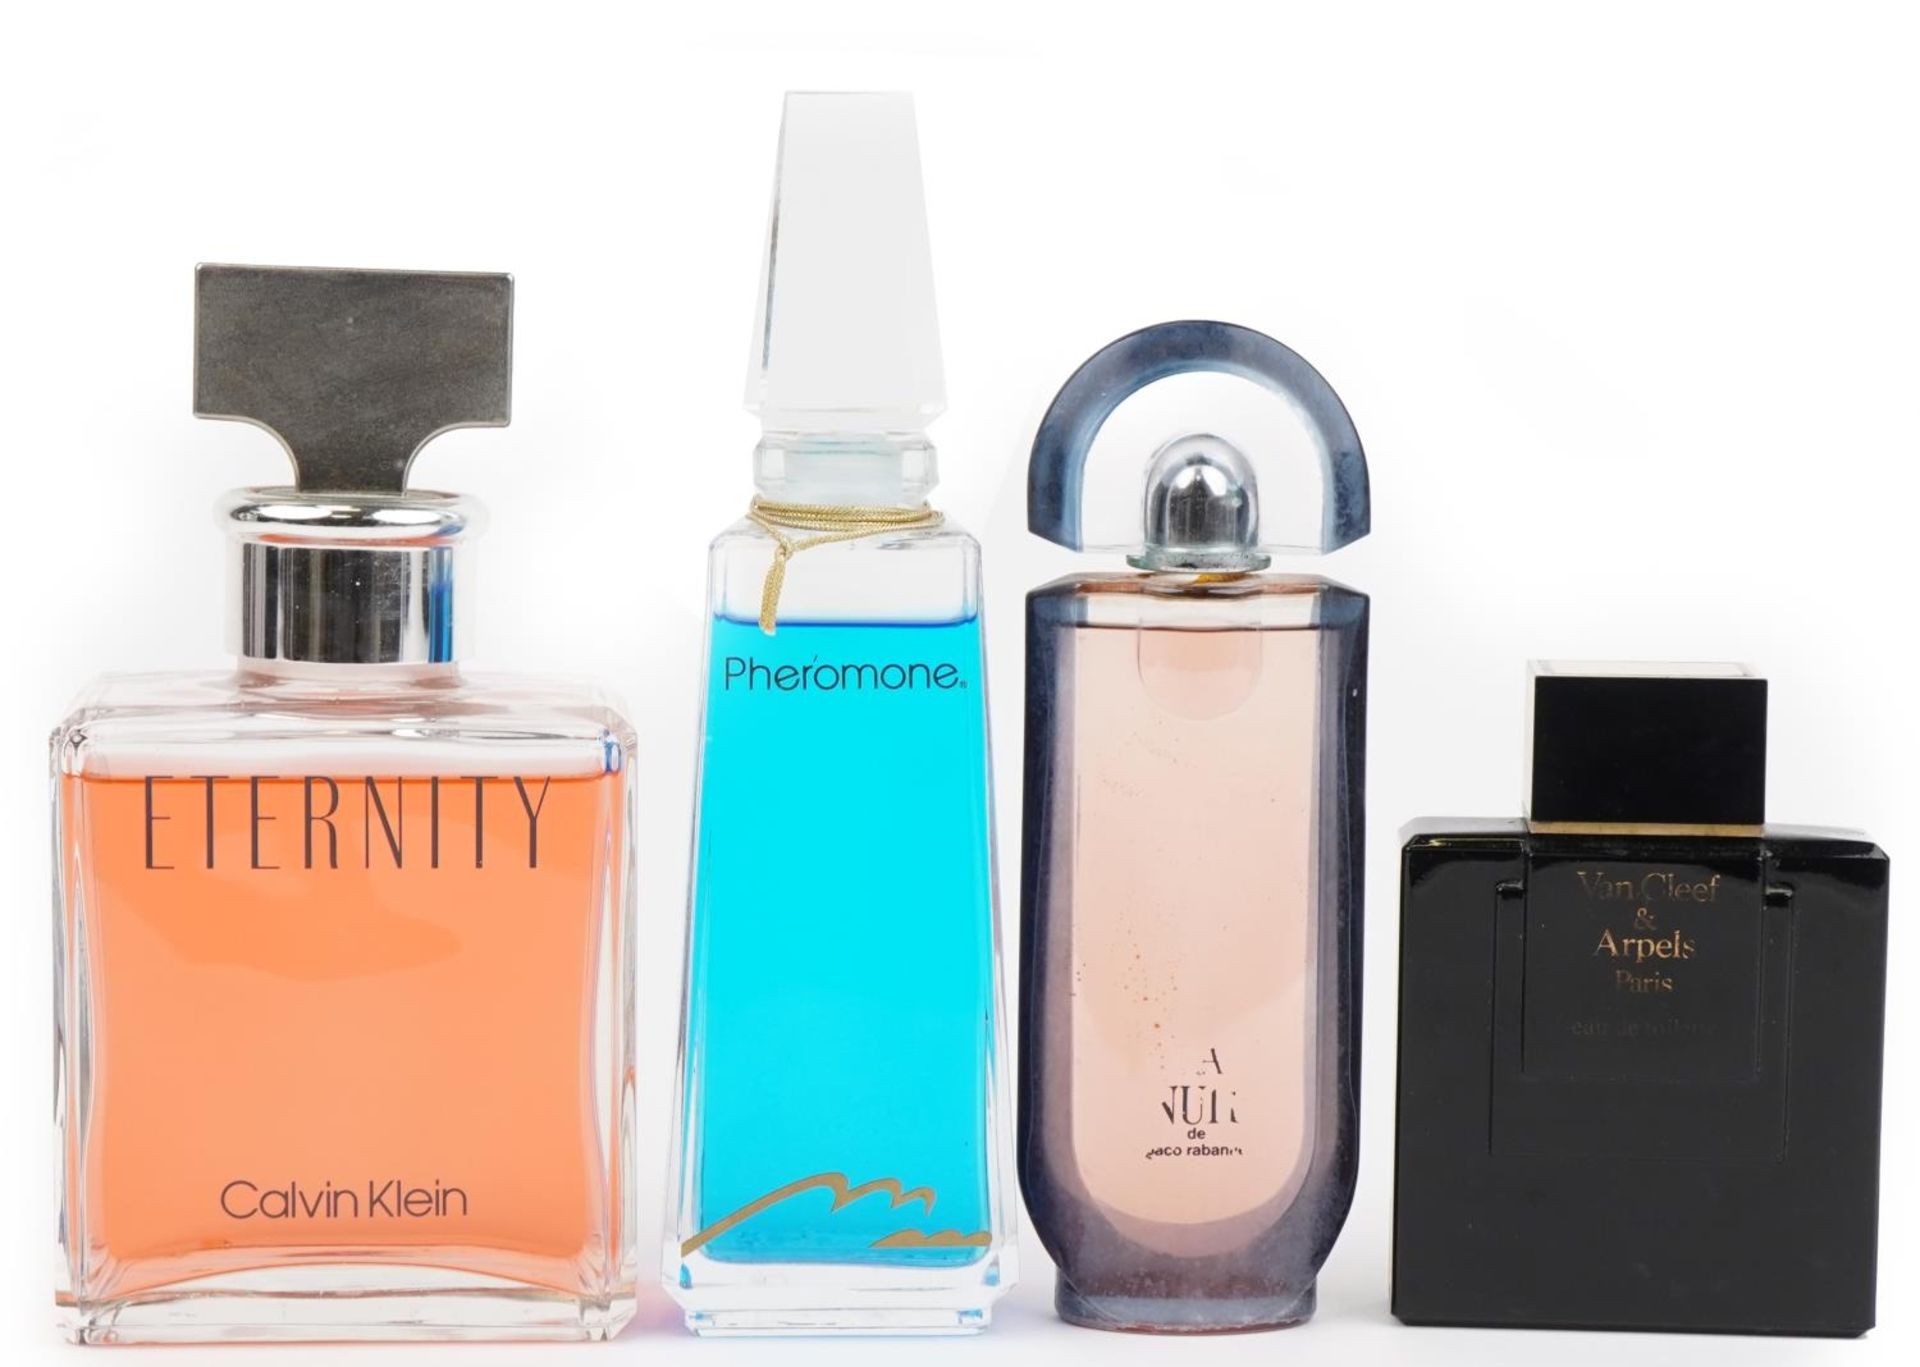 Four shop dummy display scent bottles comprising Van Cleef & Arpels, Calvin Klein Eternity, Paco